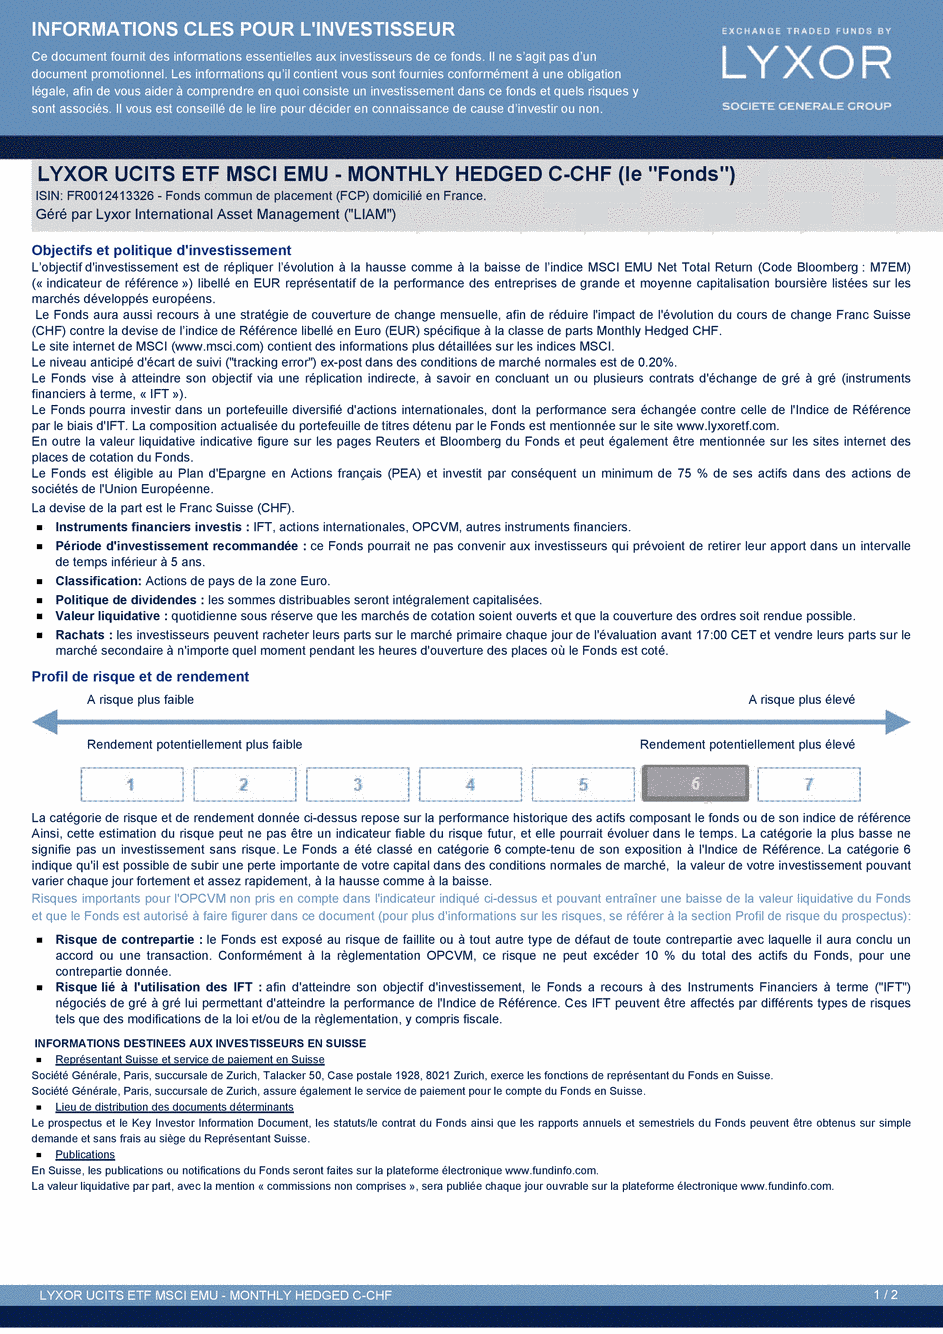 DICI LYXOR MSCI EMU UCITS ETF Daily Hedged C-CHF - 21/07/2015 - Français